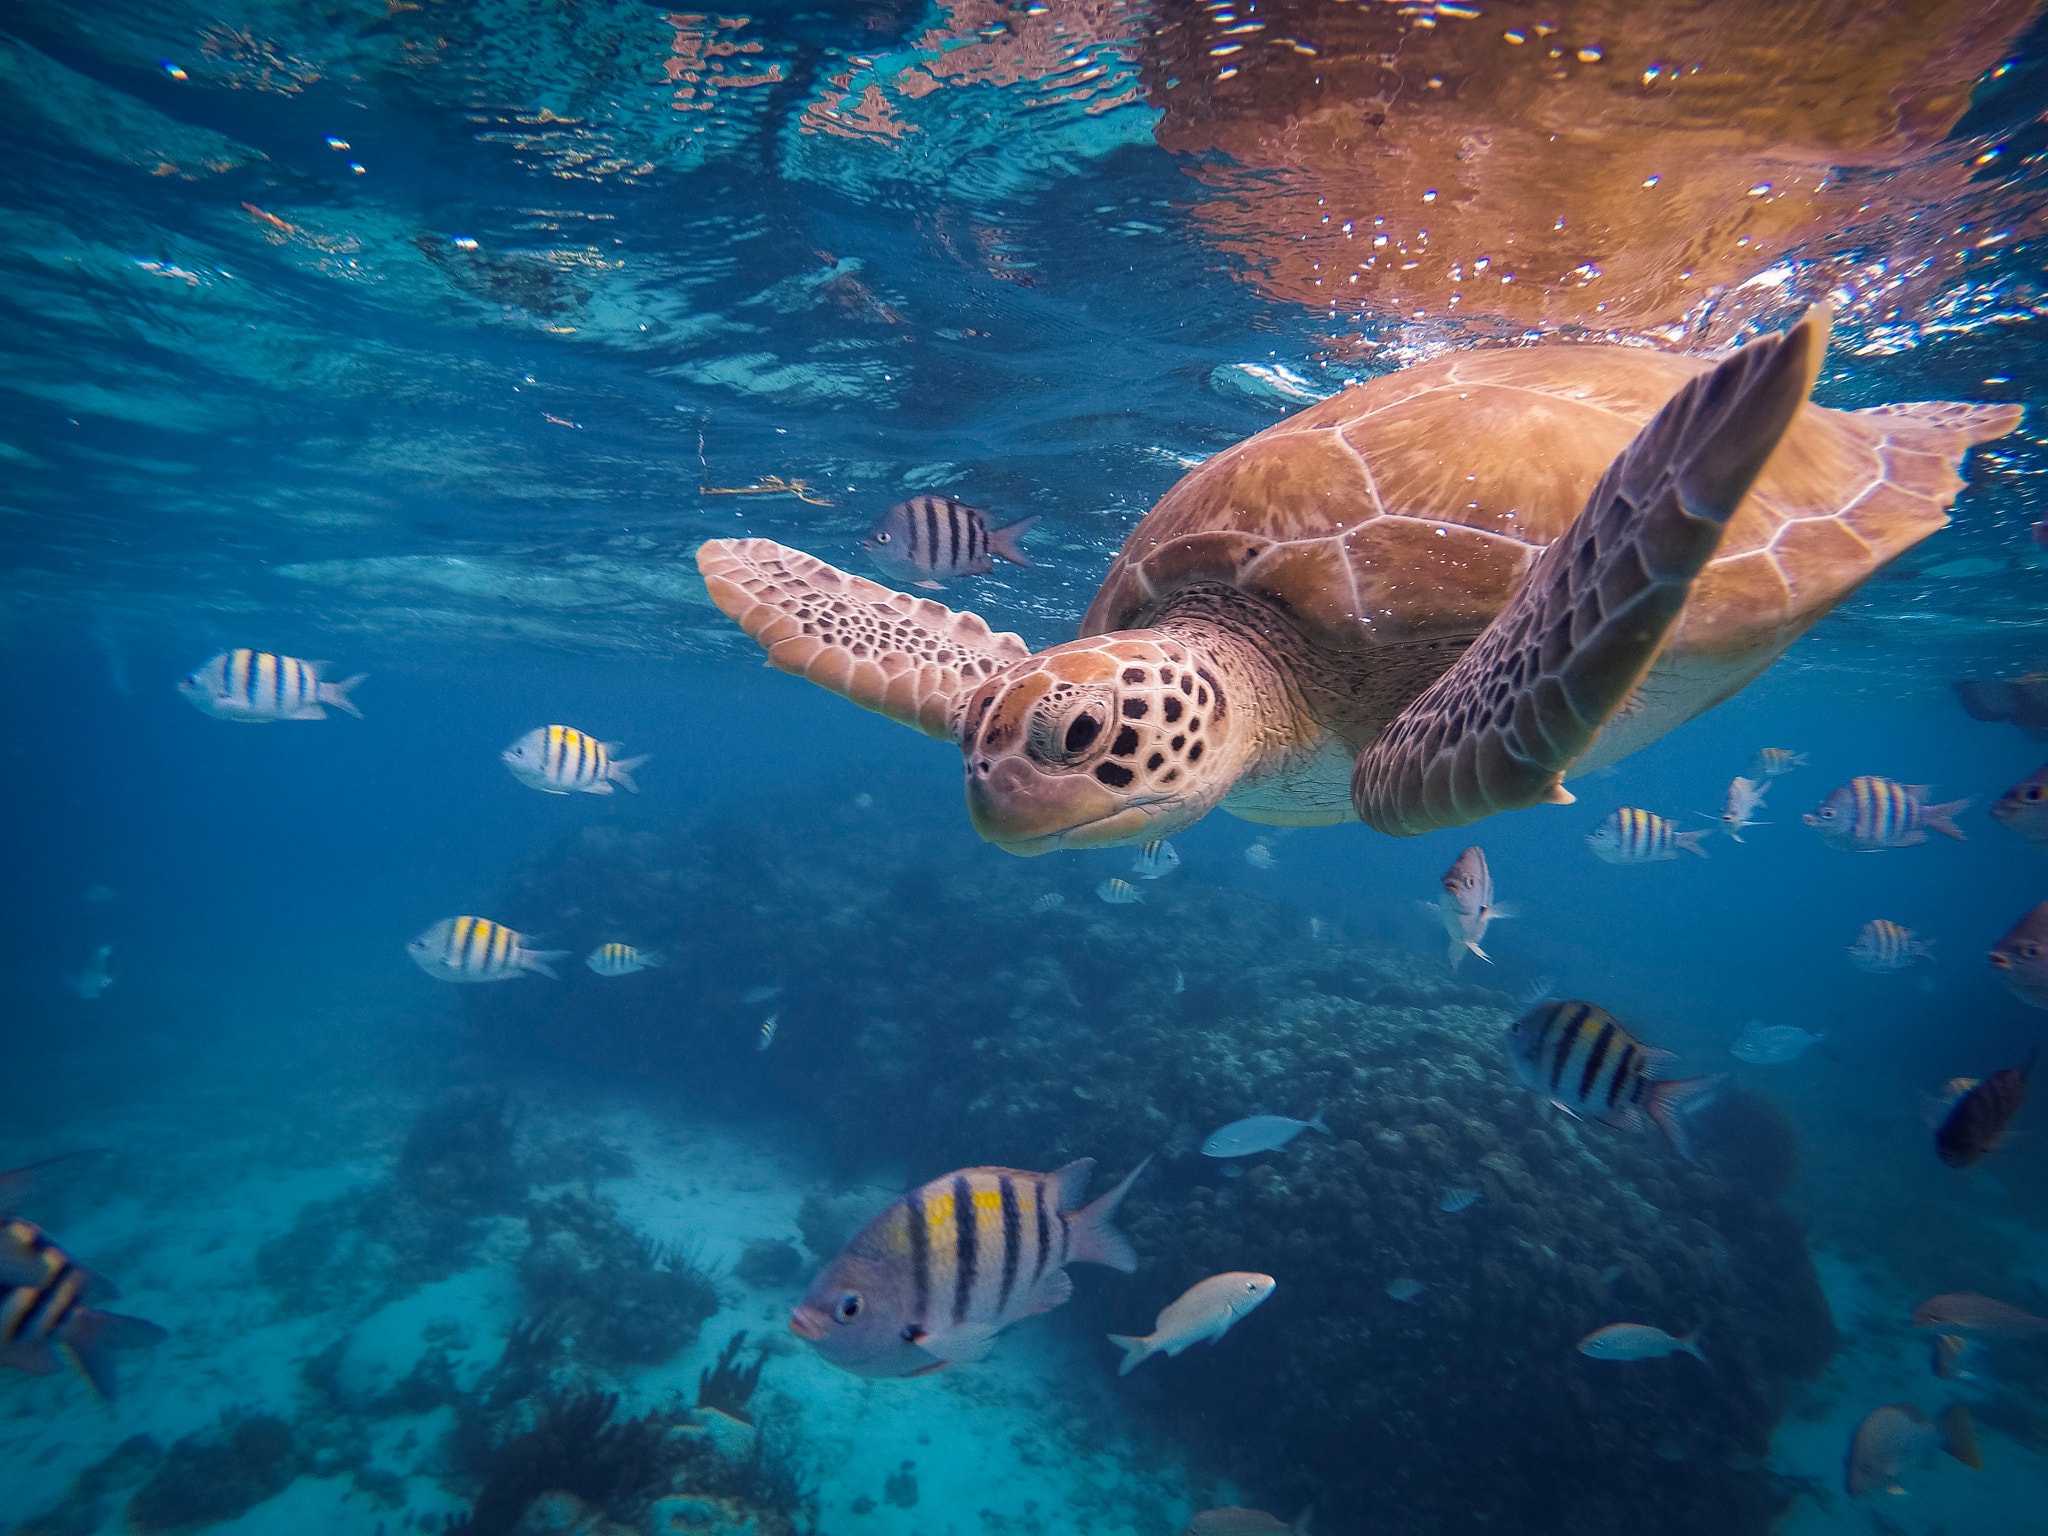 417251 descargar imagen tortugas, pez tropical, animales, tortuga marina, vida marina, submarina: fondos de pantalla y protectores de pantalla gratis